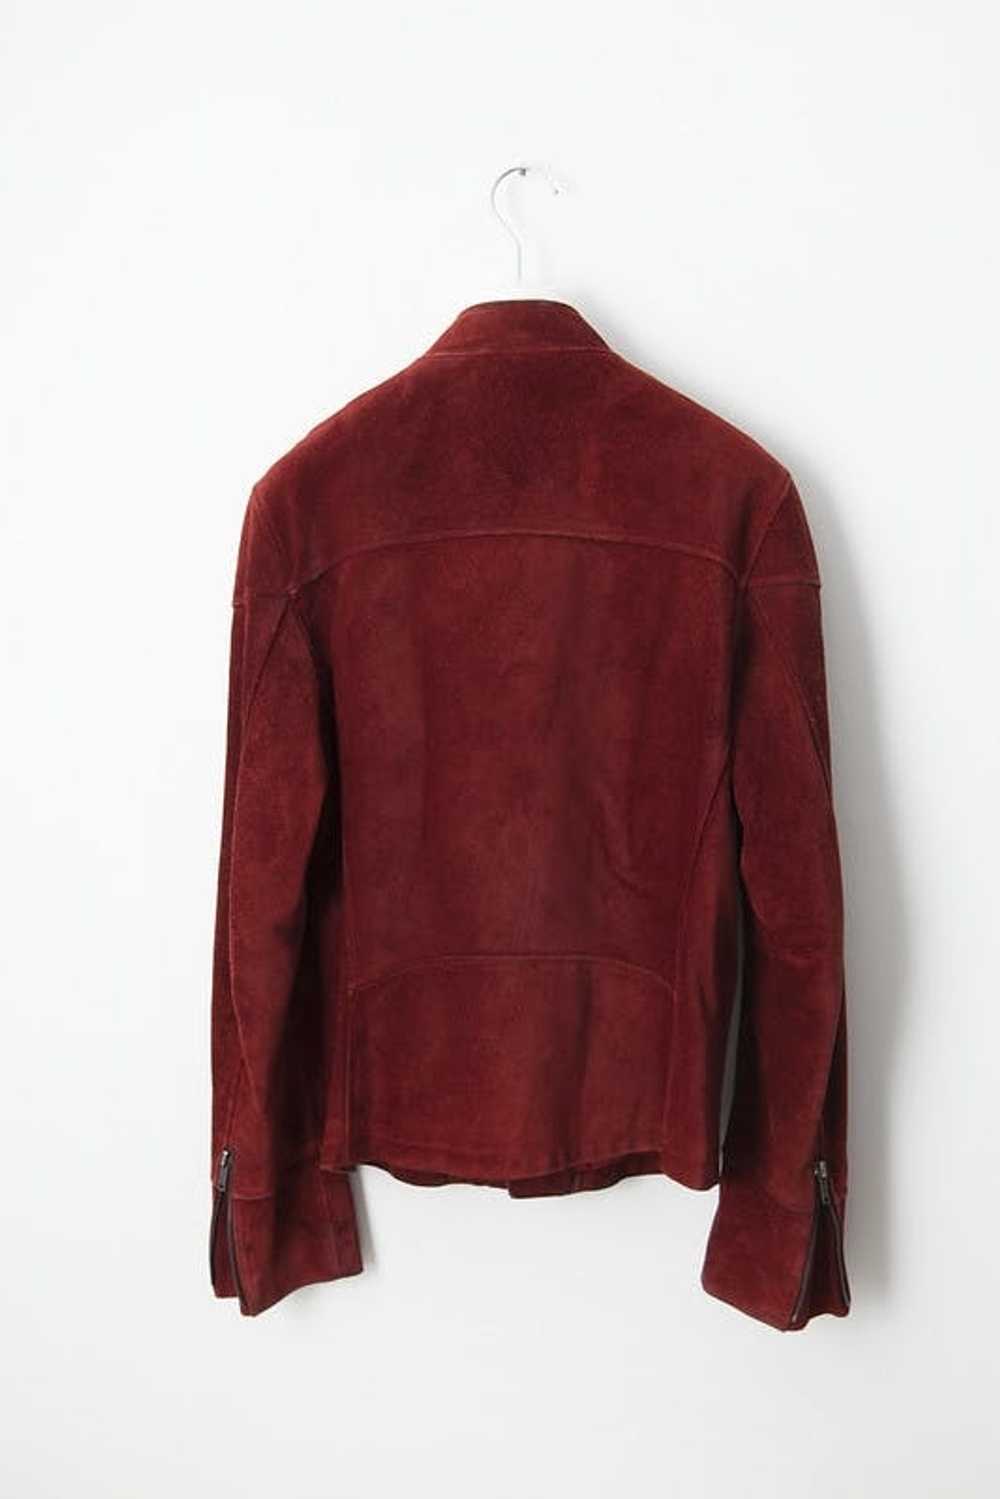 Gucci Red suede biker jacket - image 5